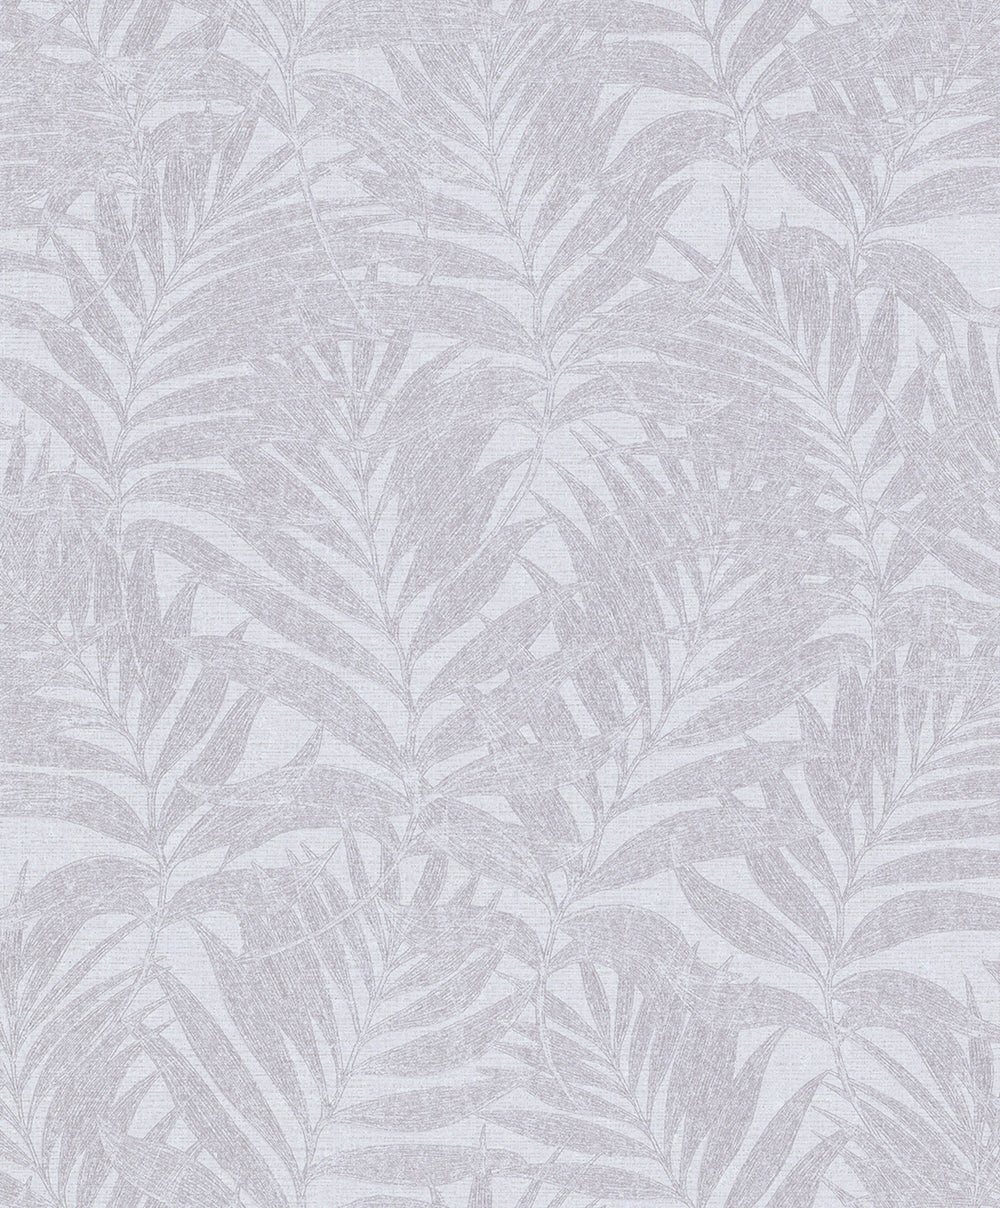 Habitat - Leaves botanical wallpaper Marburg Roll Lilac-Grey  34006